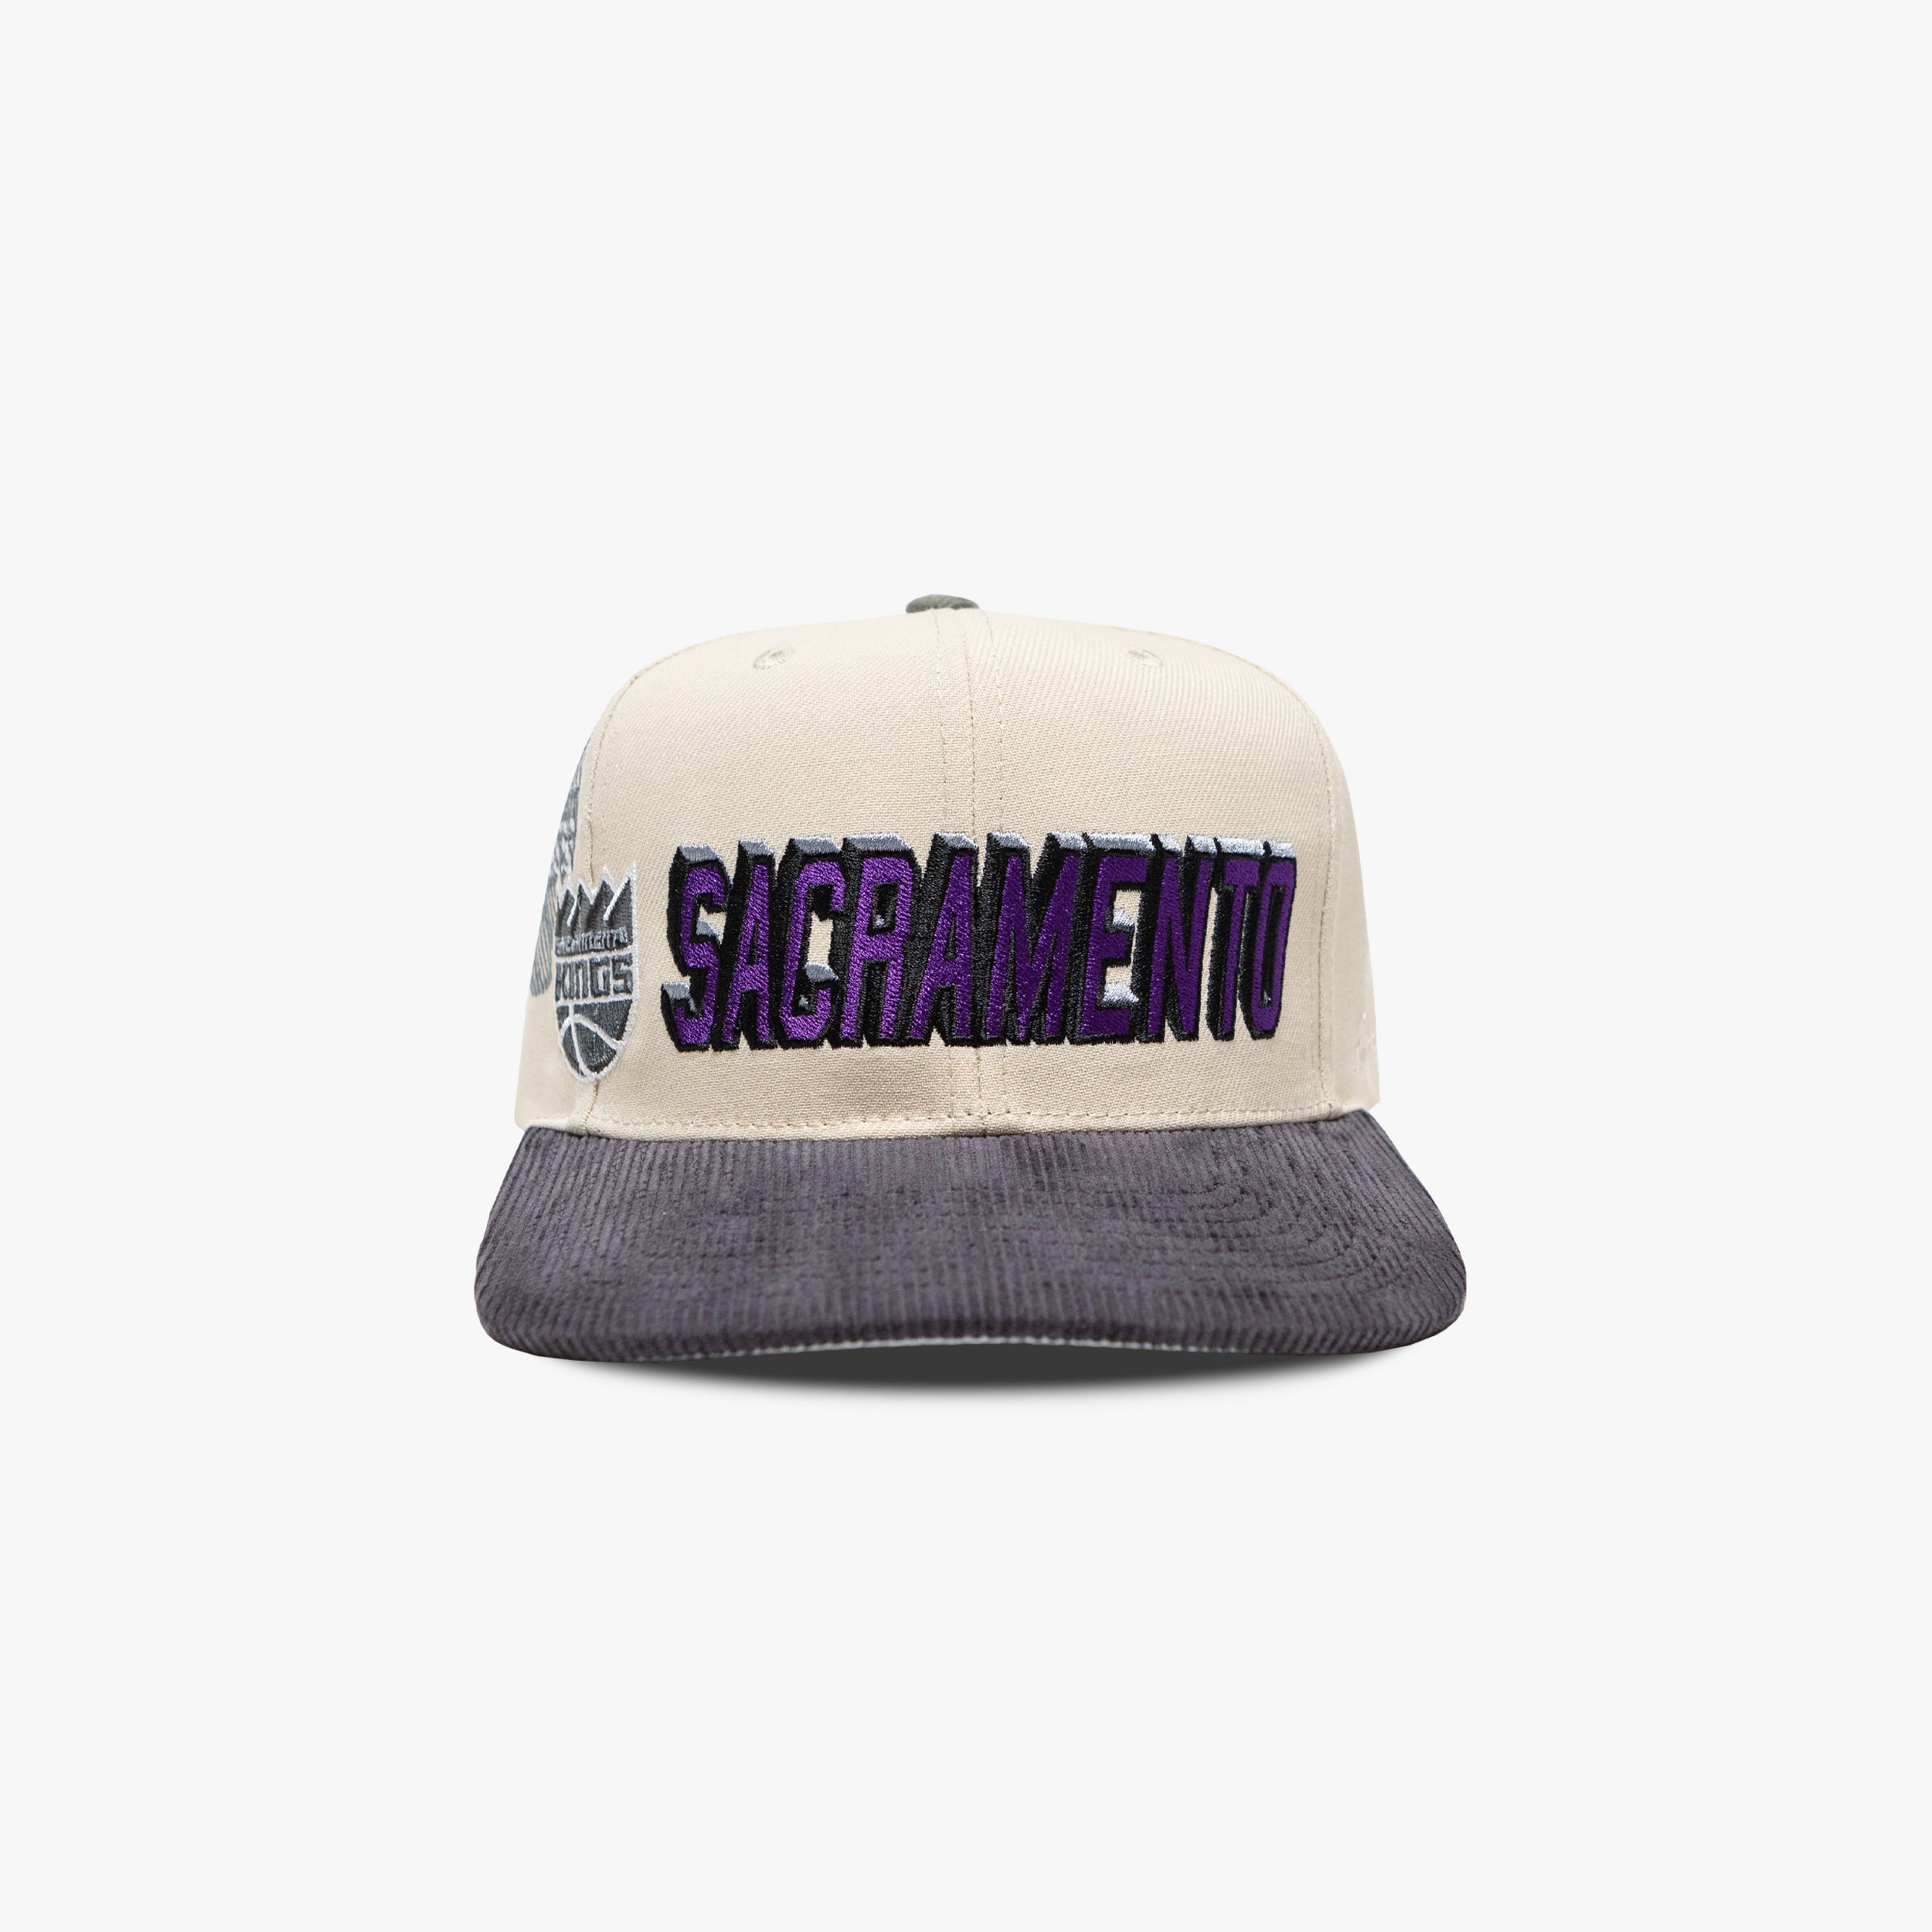 no name, Accessories, Sacramento Kings Sample Snapback Vintage Hat